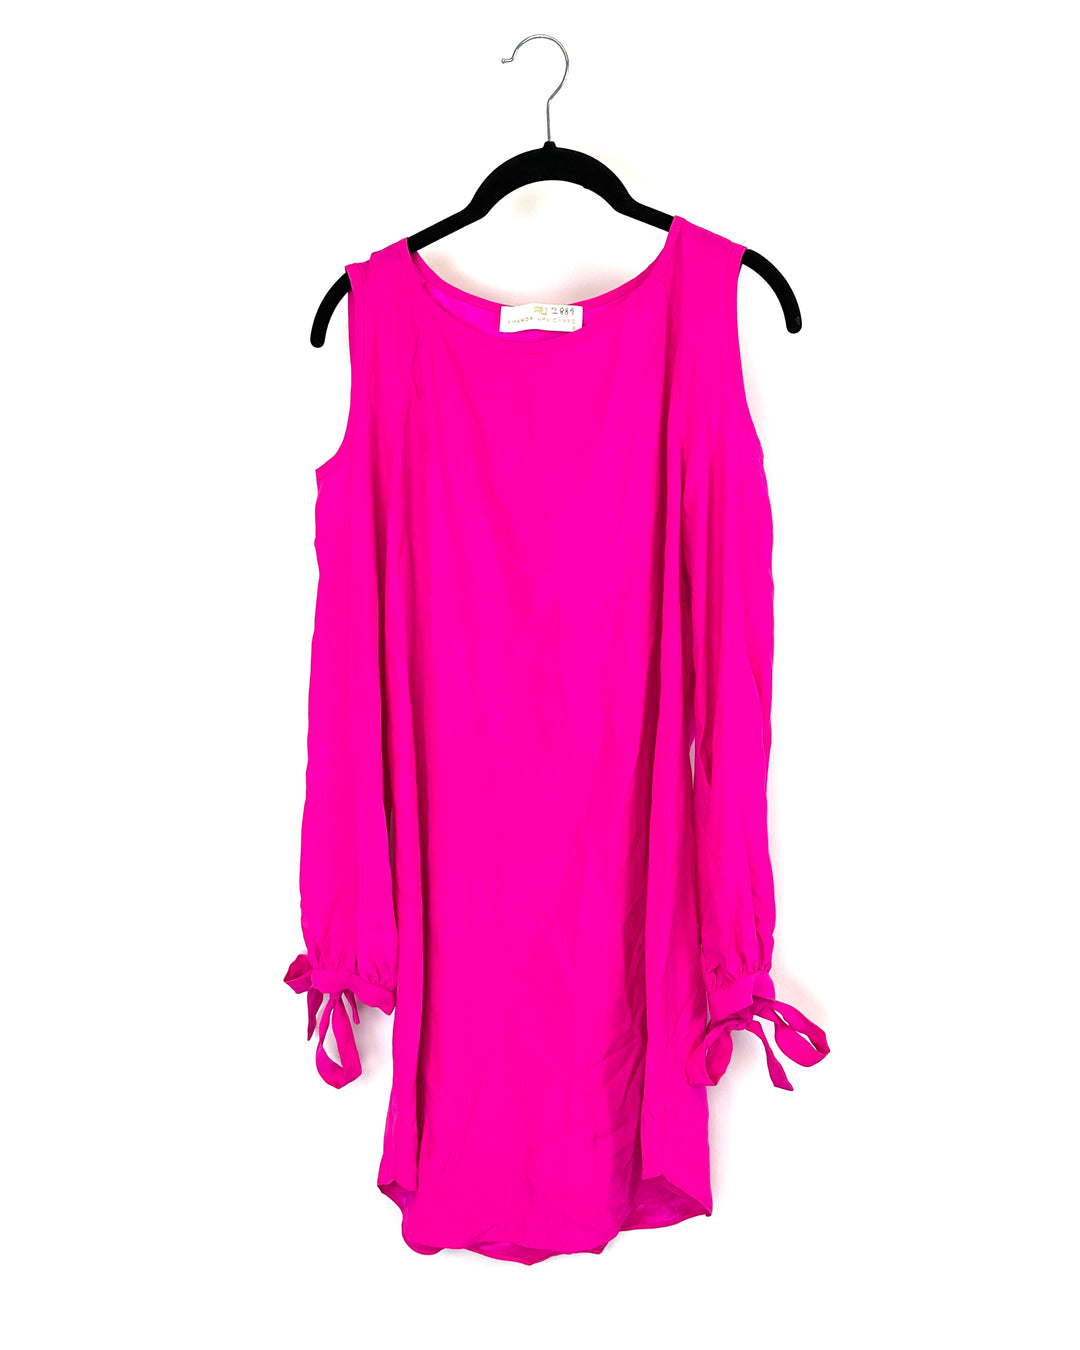 Hot Pink Long Sleeve Dress - Size 4-6